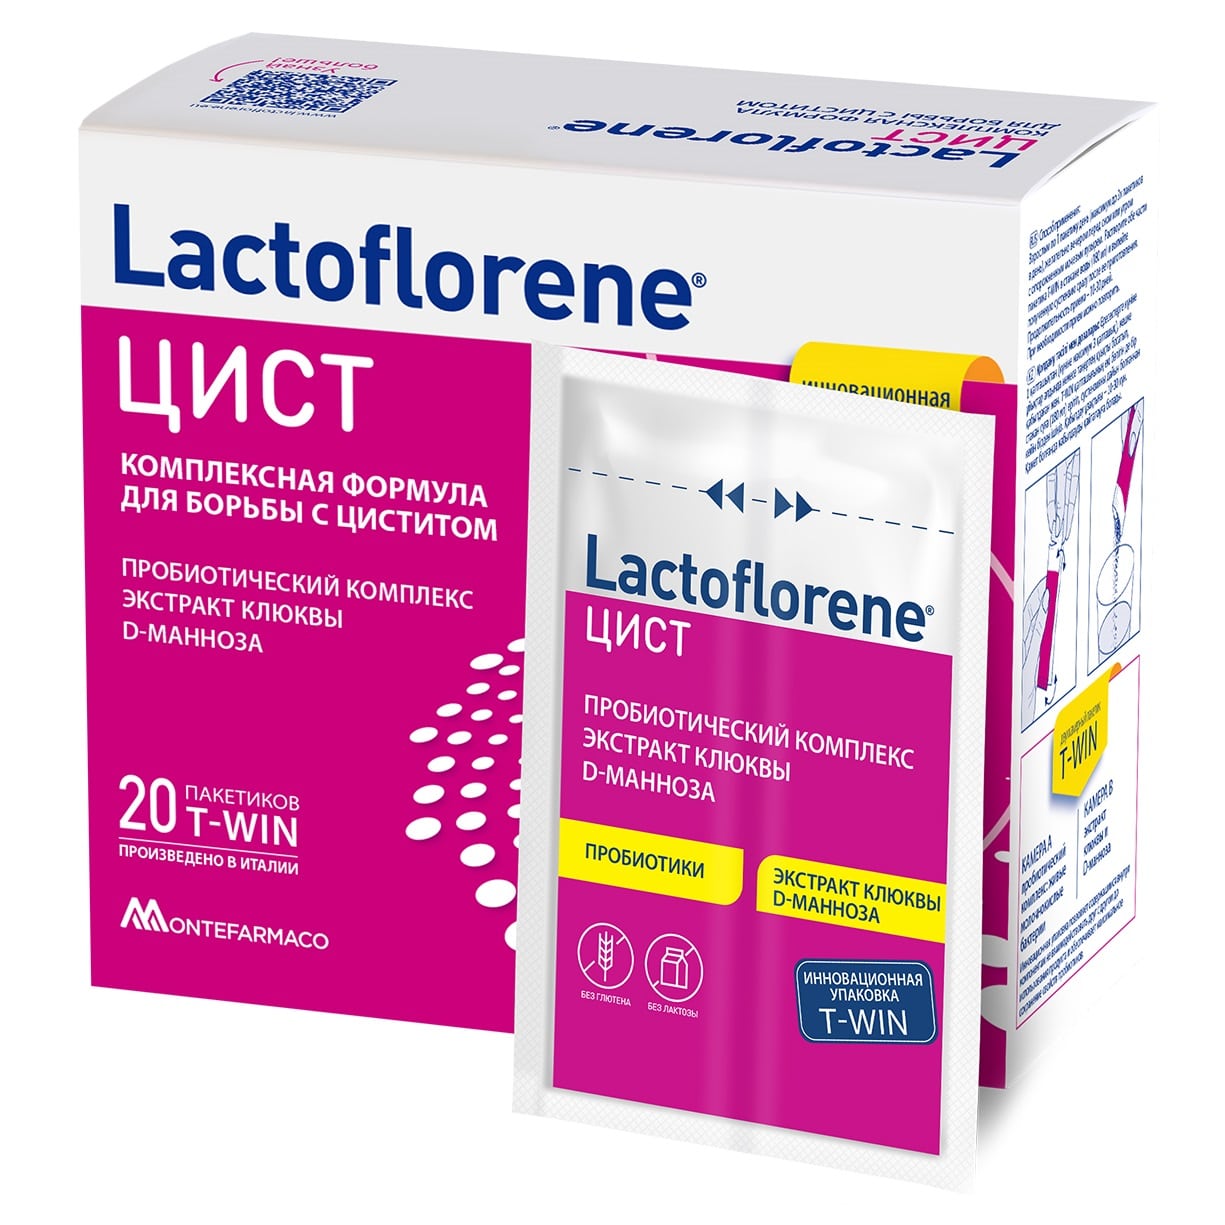 Lactoflorene Пробиотический комплекс Цист, 20 пакетиков (Lac